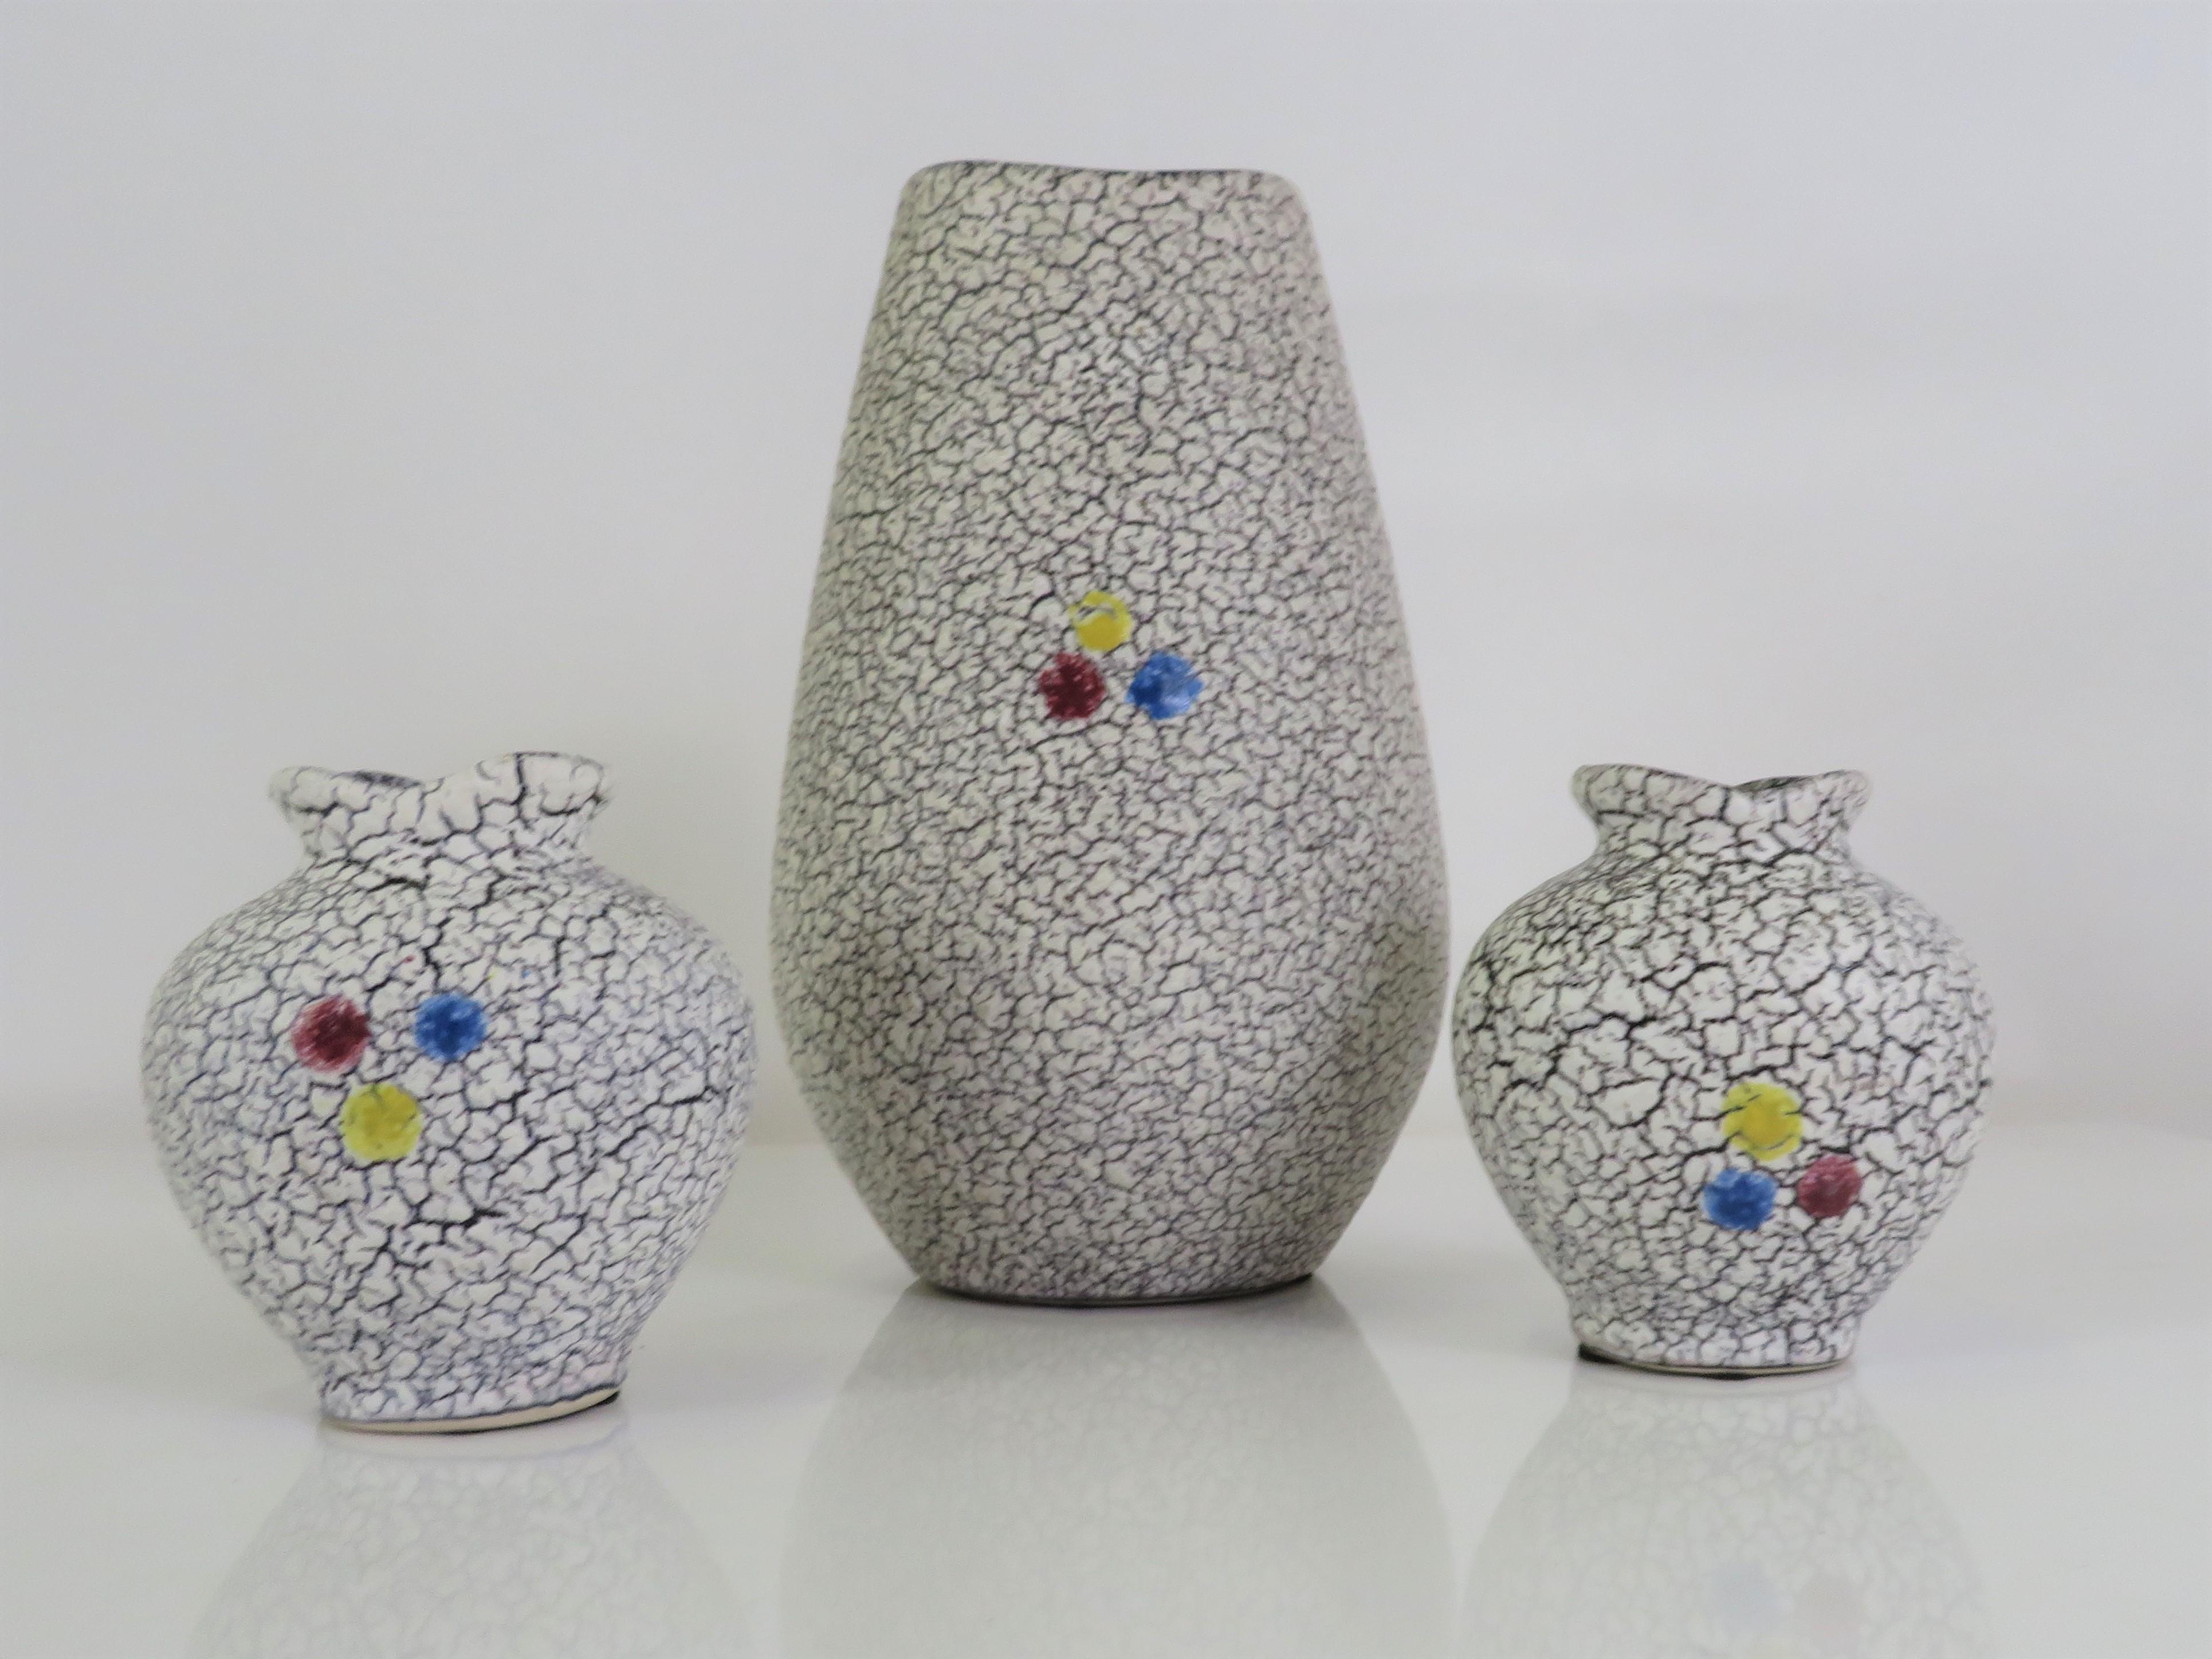 1958 Grouping of 3 Jopeko Keramik Crinkled Lava Glaze Ceramics Germany In Good Condition For Sale In Miami, FL